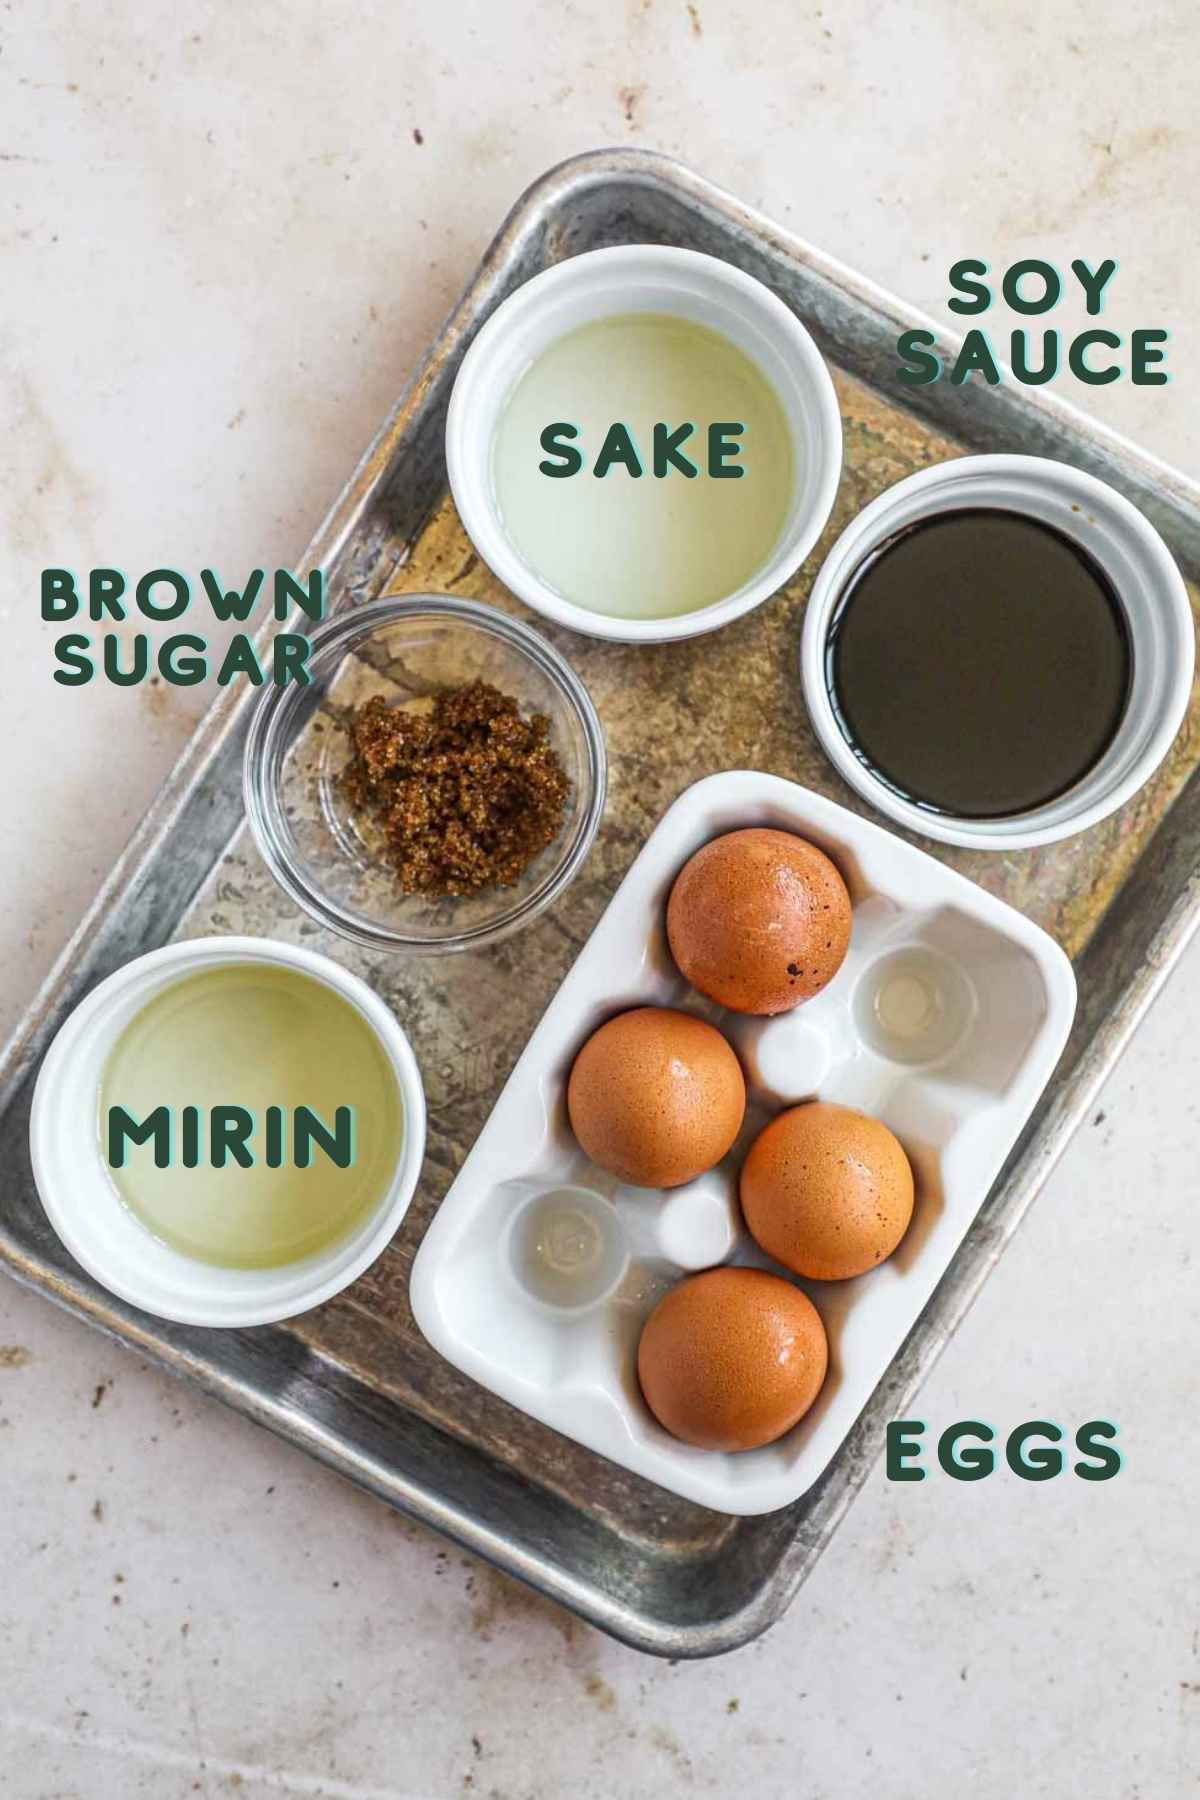 Ingredients to make ajitama ramen eggs, including eggs, brown sugar, mirin, sake, and soy sauce.